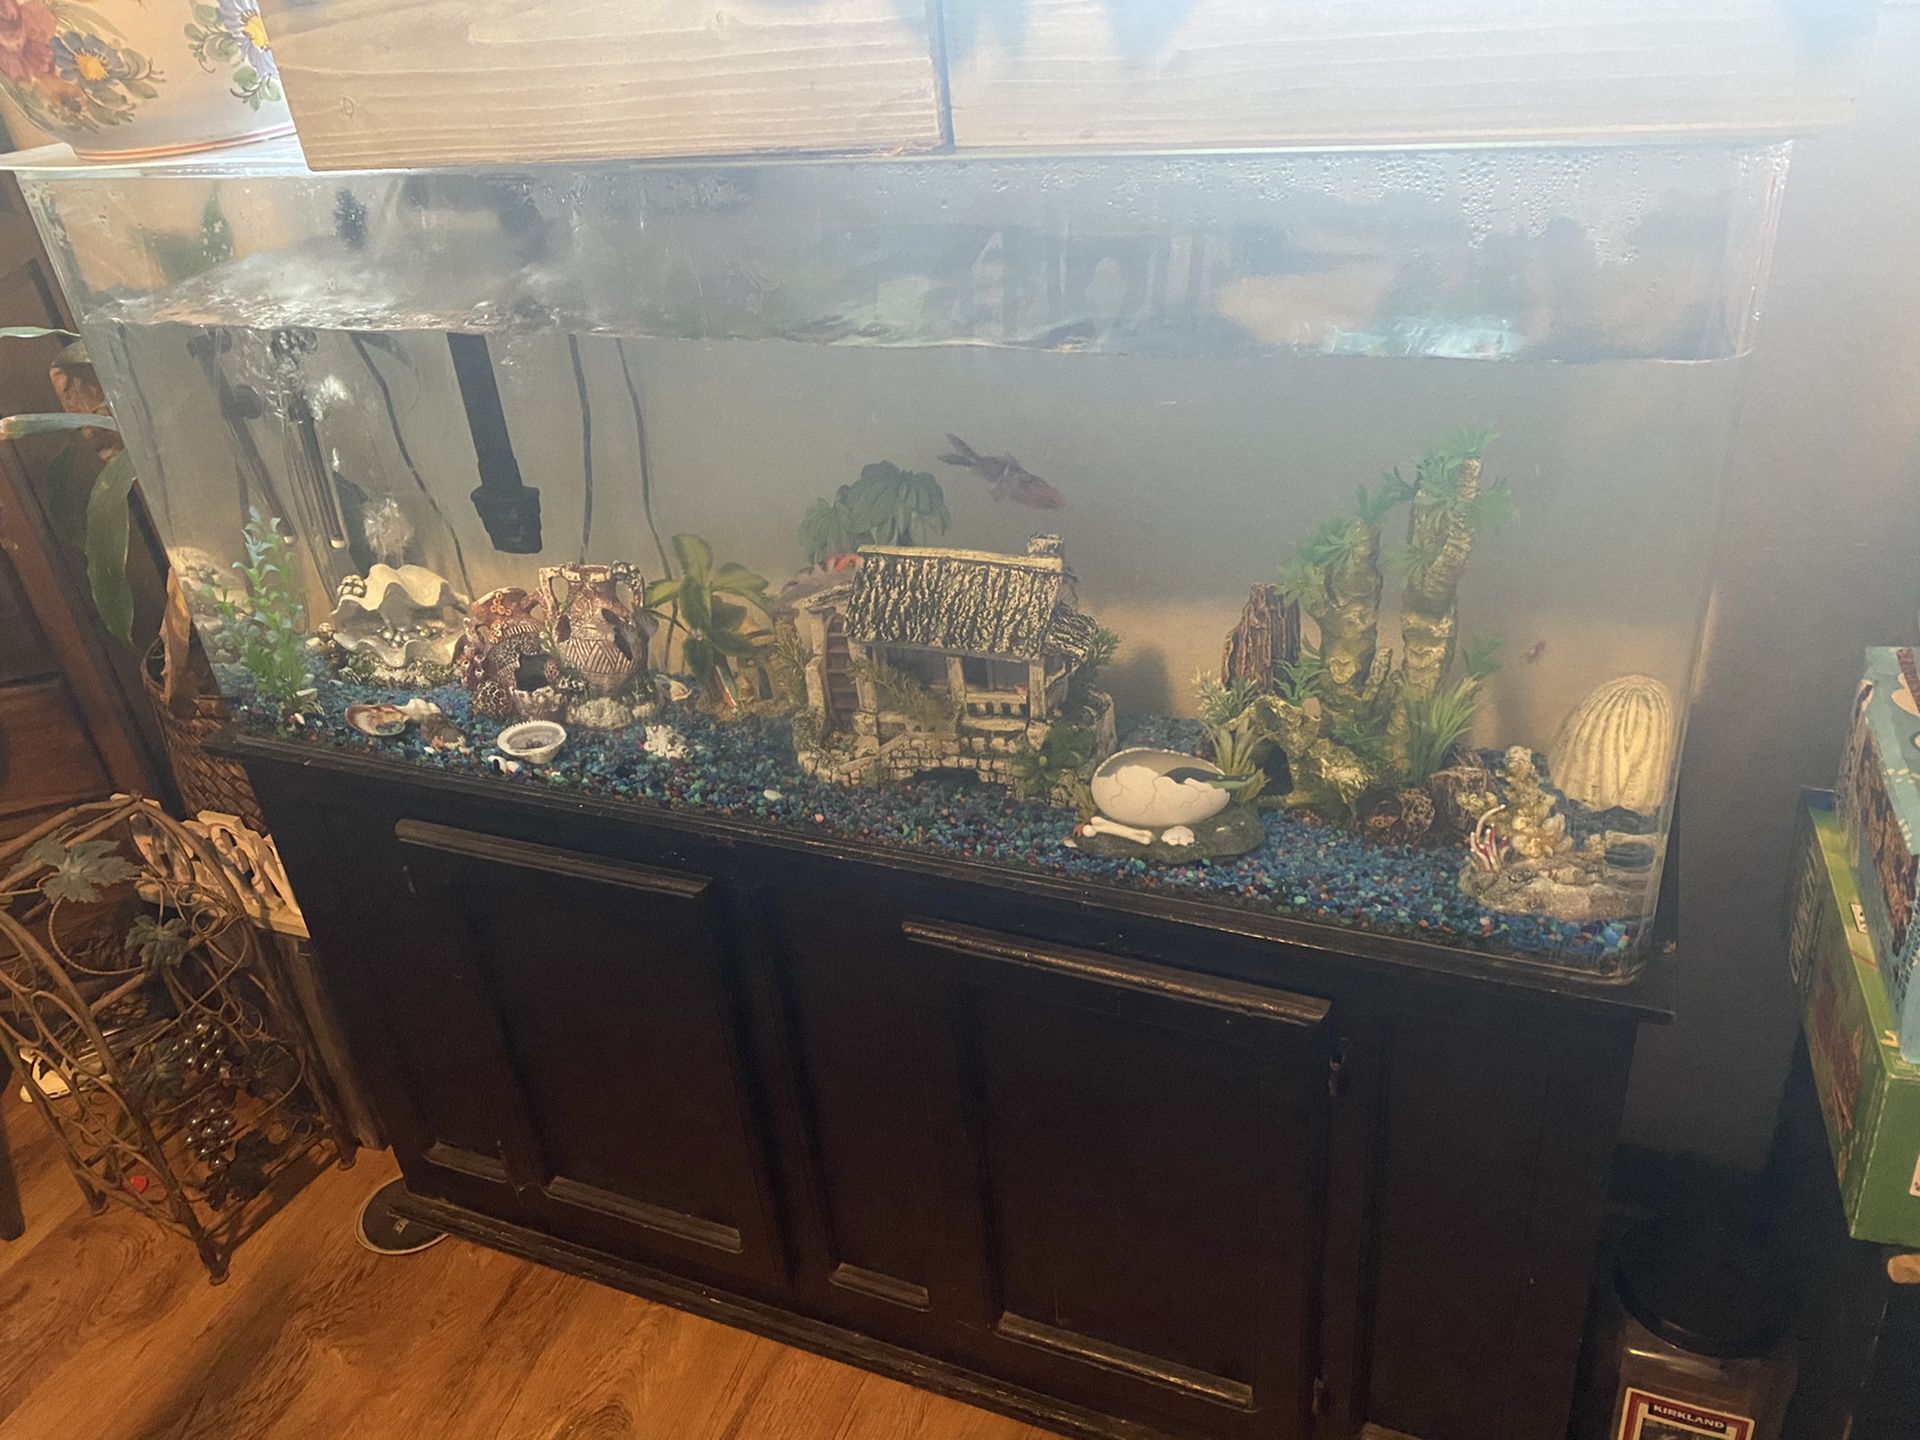 55 gallon fish tank (acrylic)